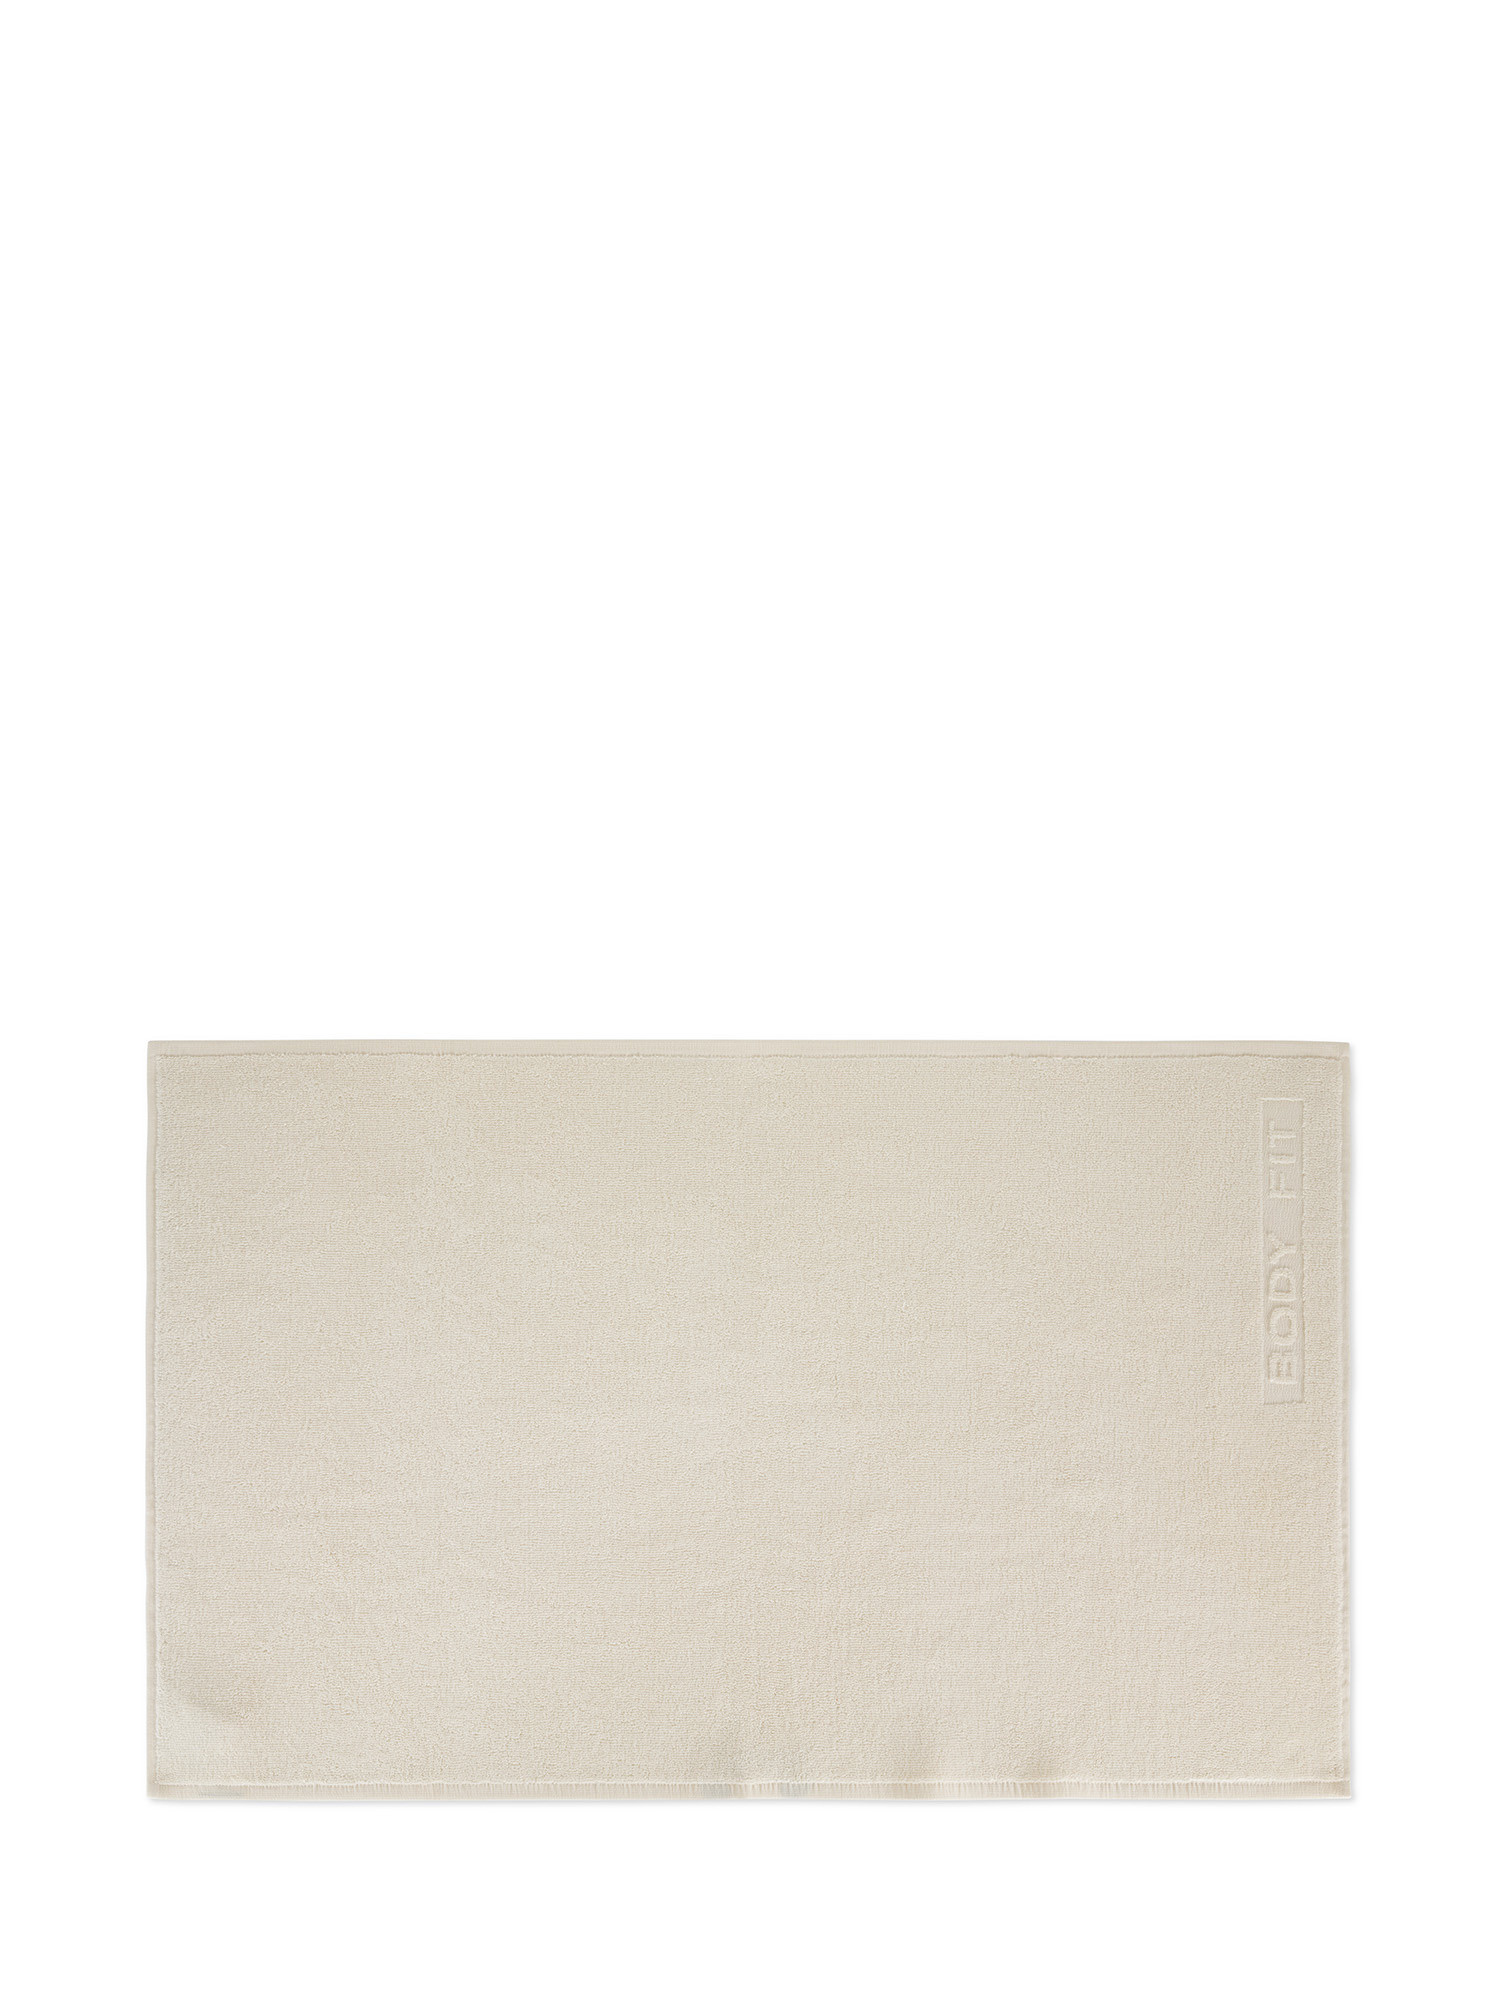 Set telo bagno e asciugamano per capelli  in spugna di cotone stretch, Bianco, large image number 2